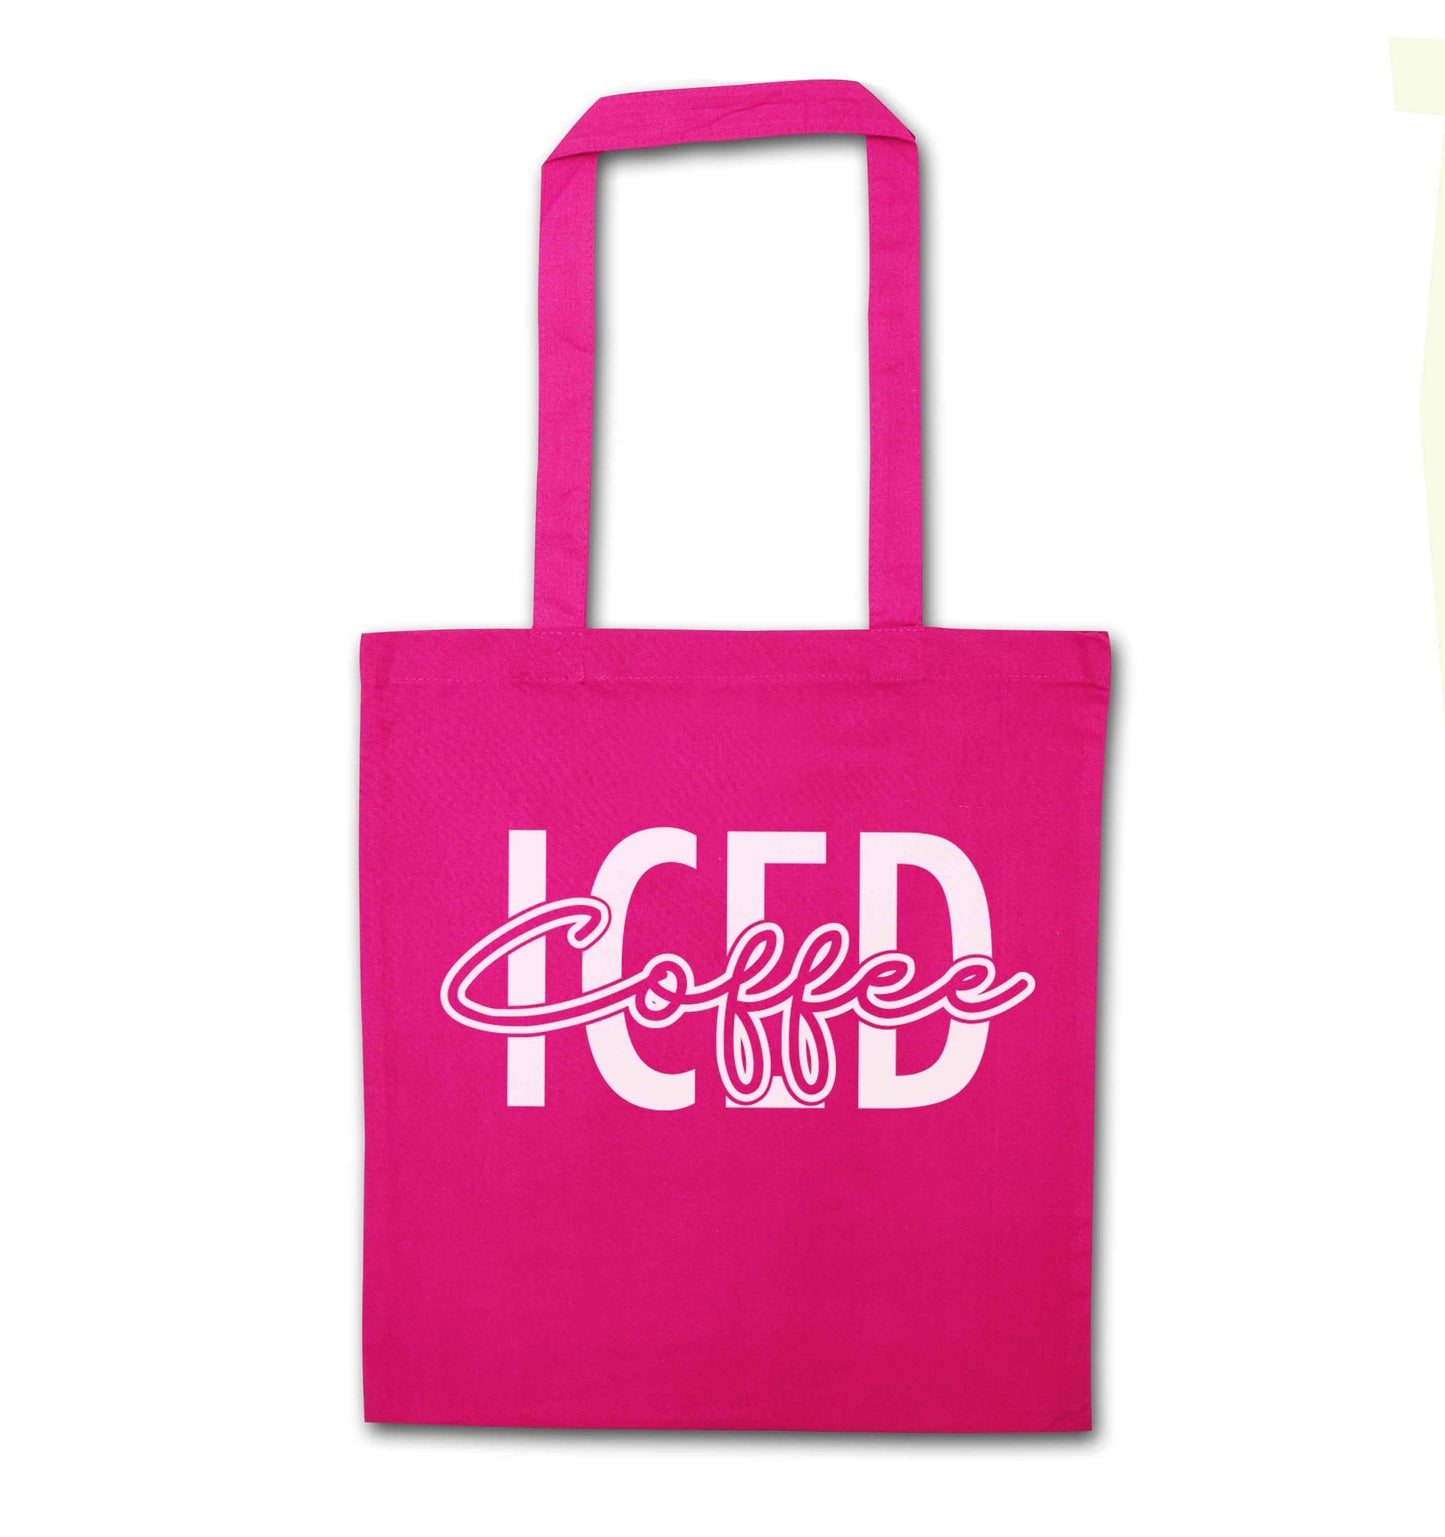 Iced Coffee pink tote bag